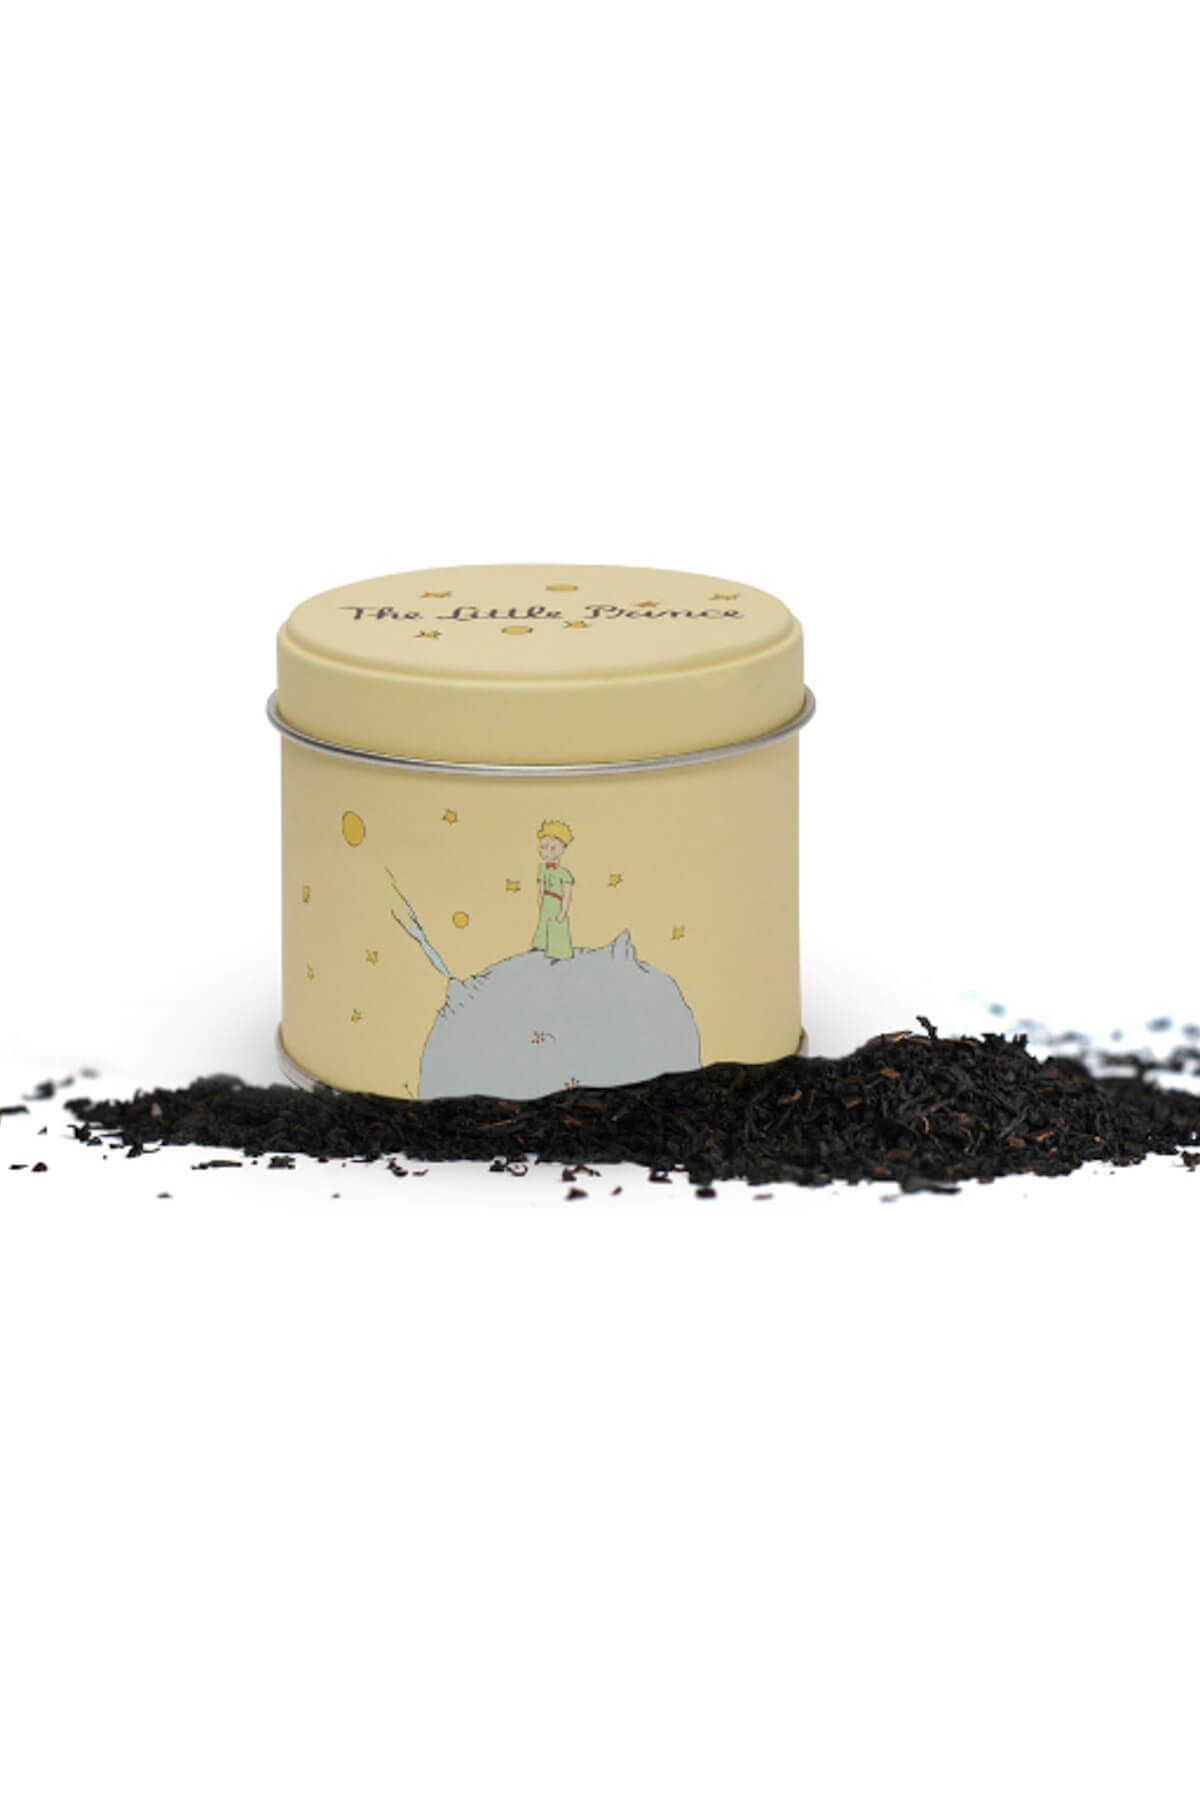 Chado Tea The Little Prince - Küçük Prens Harman Çayı 50 g